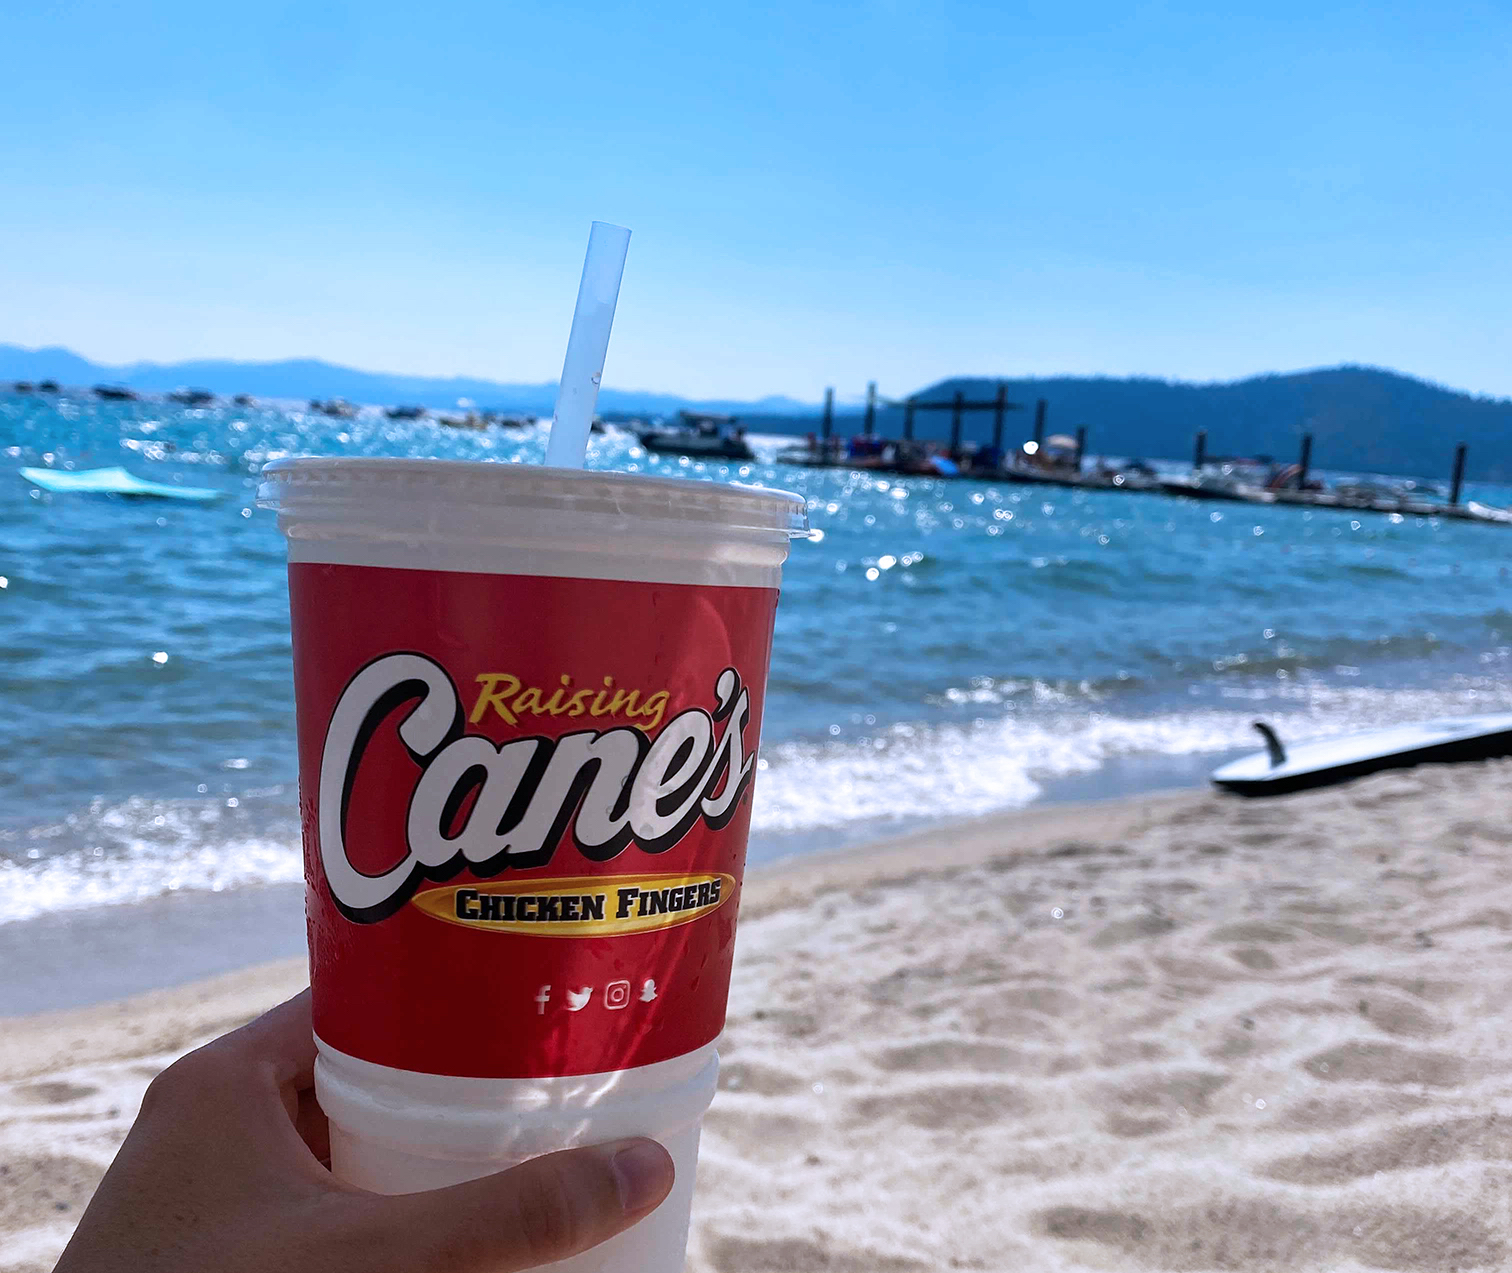 Raising Cane's beverage being enjoyed on the beach